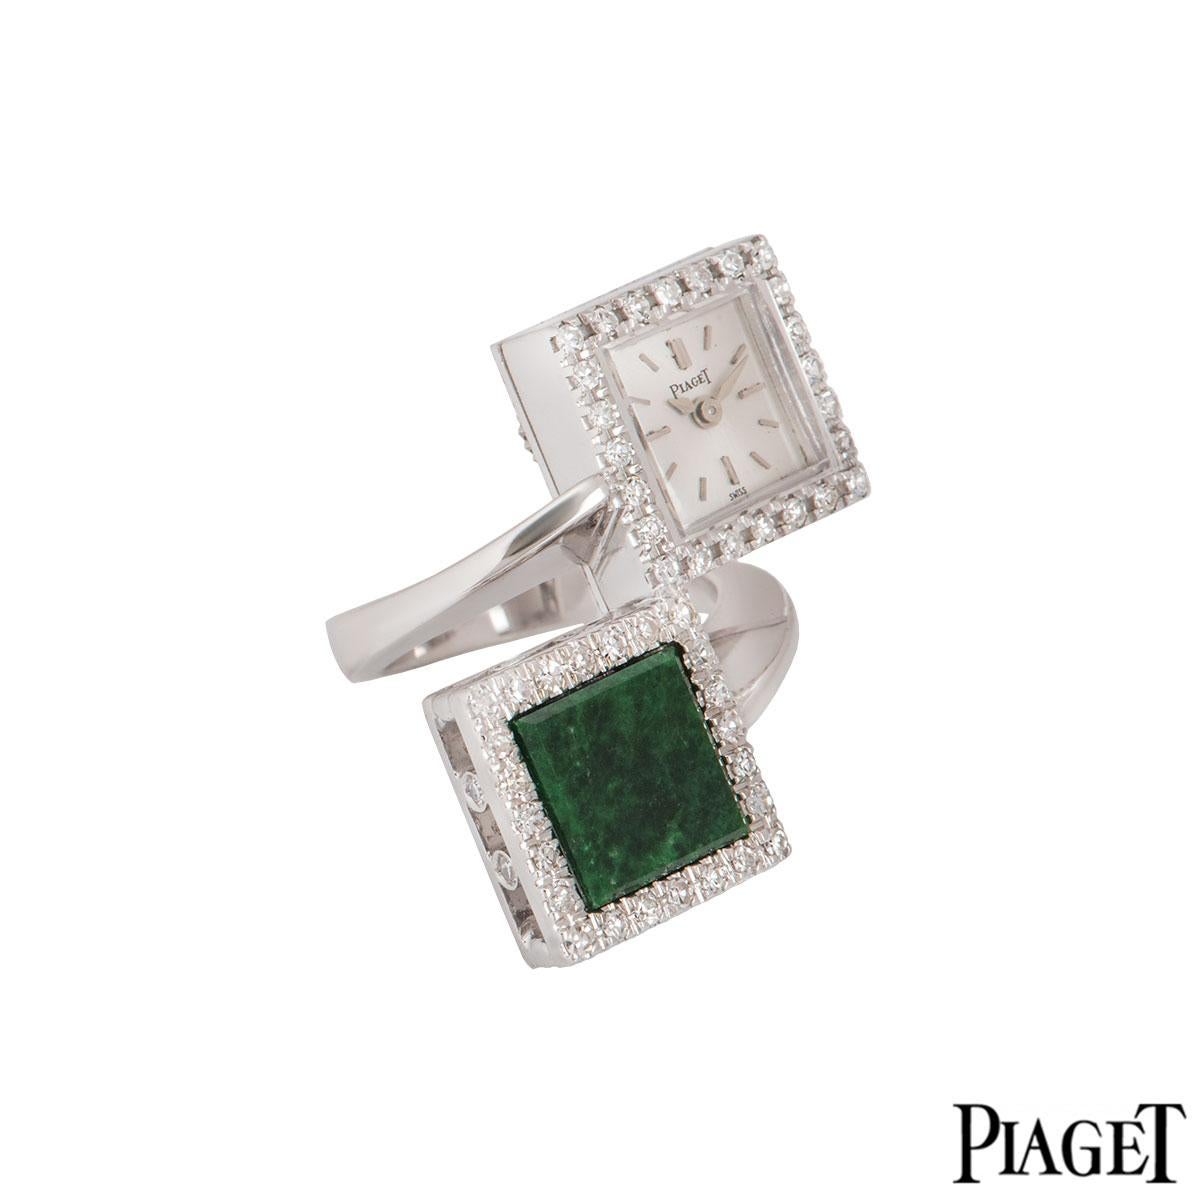 Women's Piaget Diamond and Jade Ring Watch